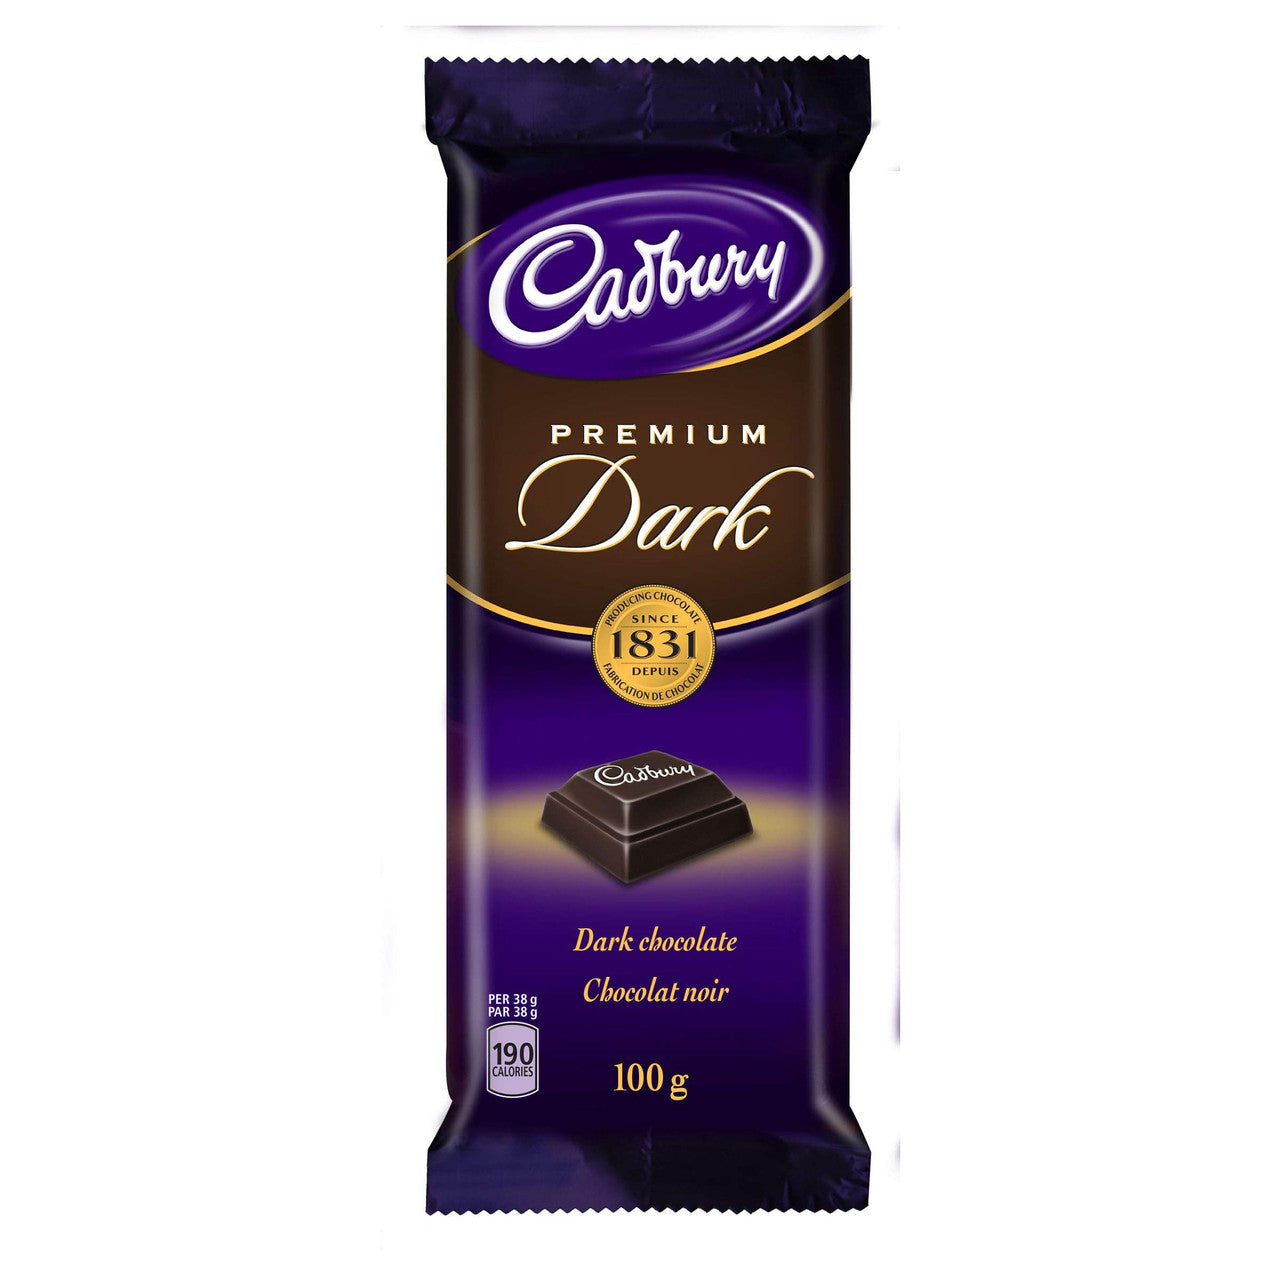 Cadbury Premium Dark Chocolate Bar, 100g/3.5oz, (Imported from Canada)